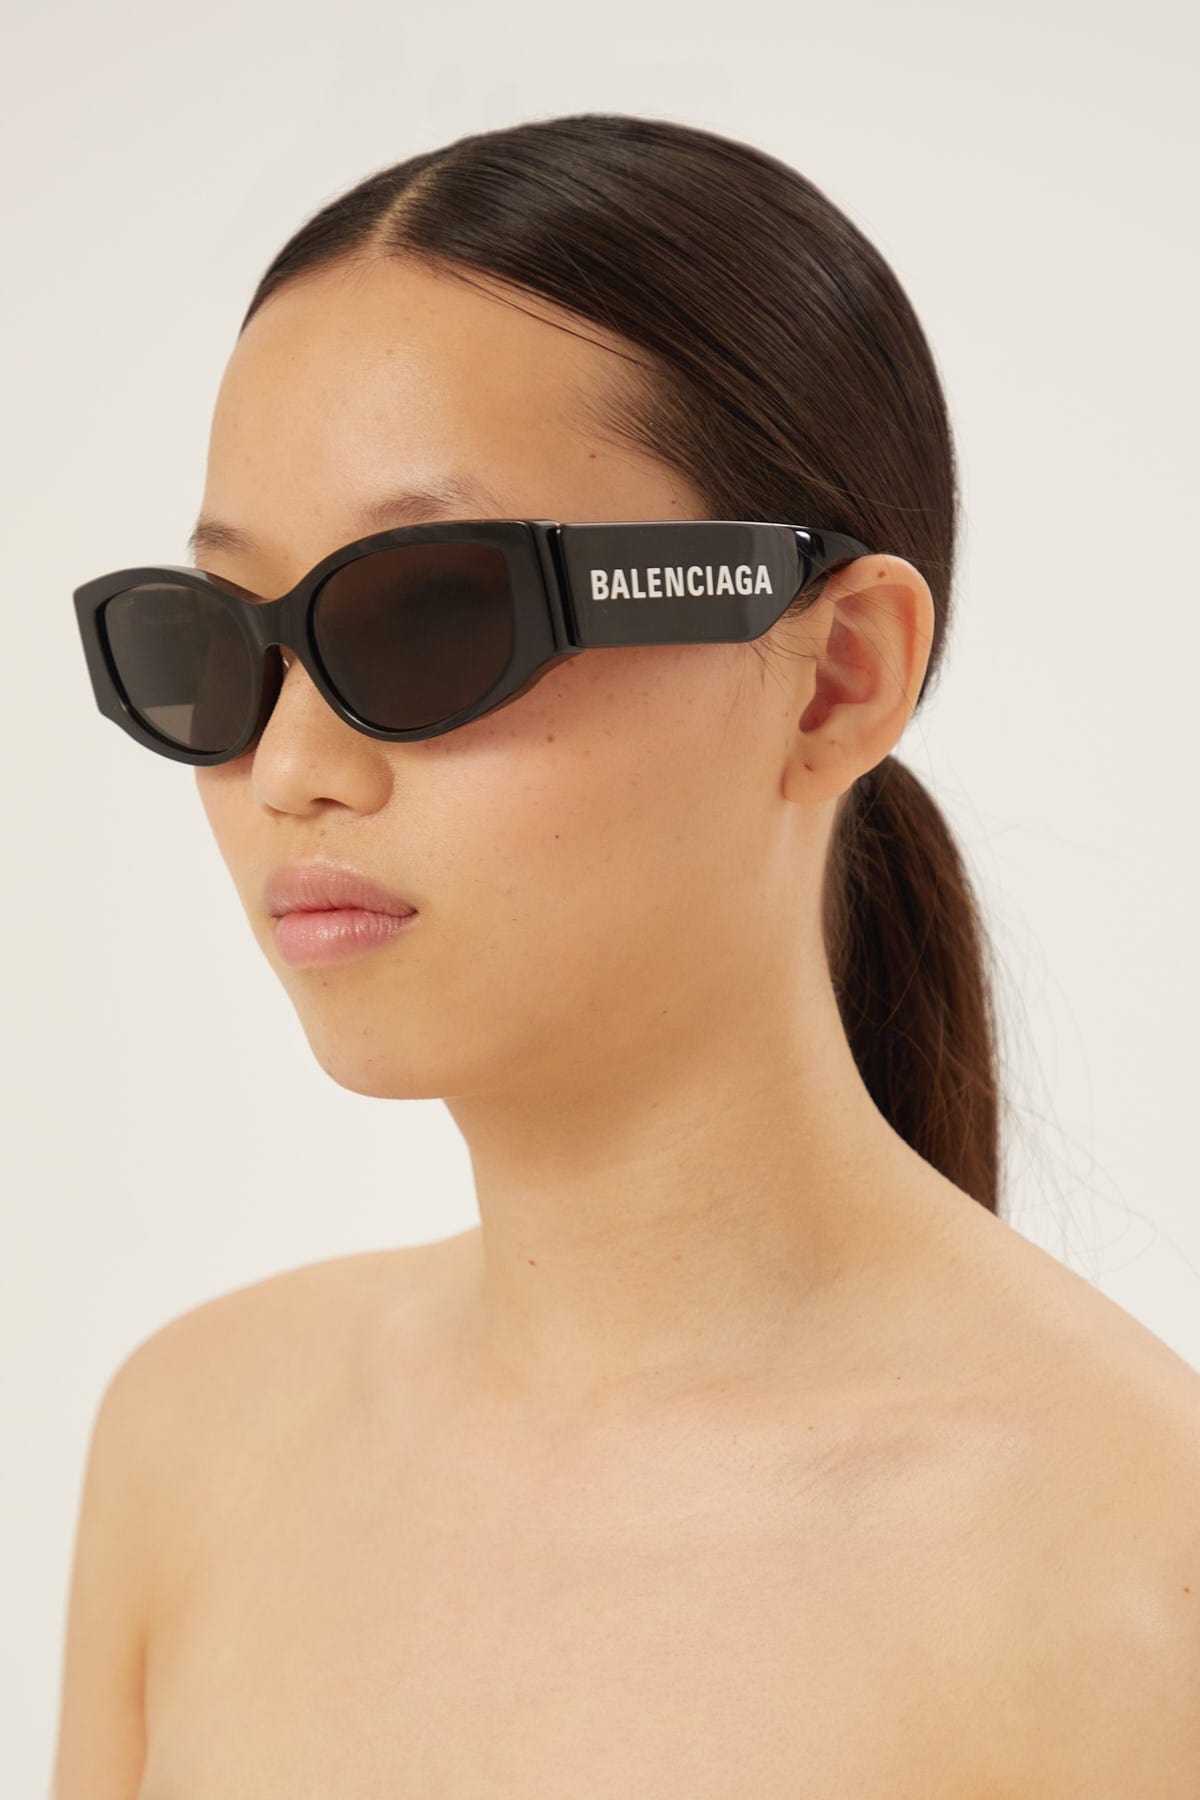 Balenciaga chunky black sunglasses - Eyewear Club